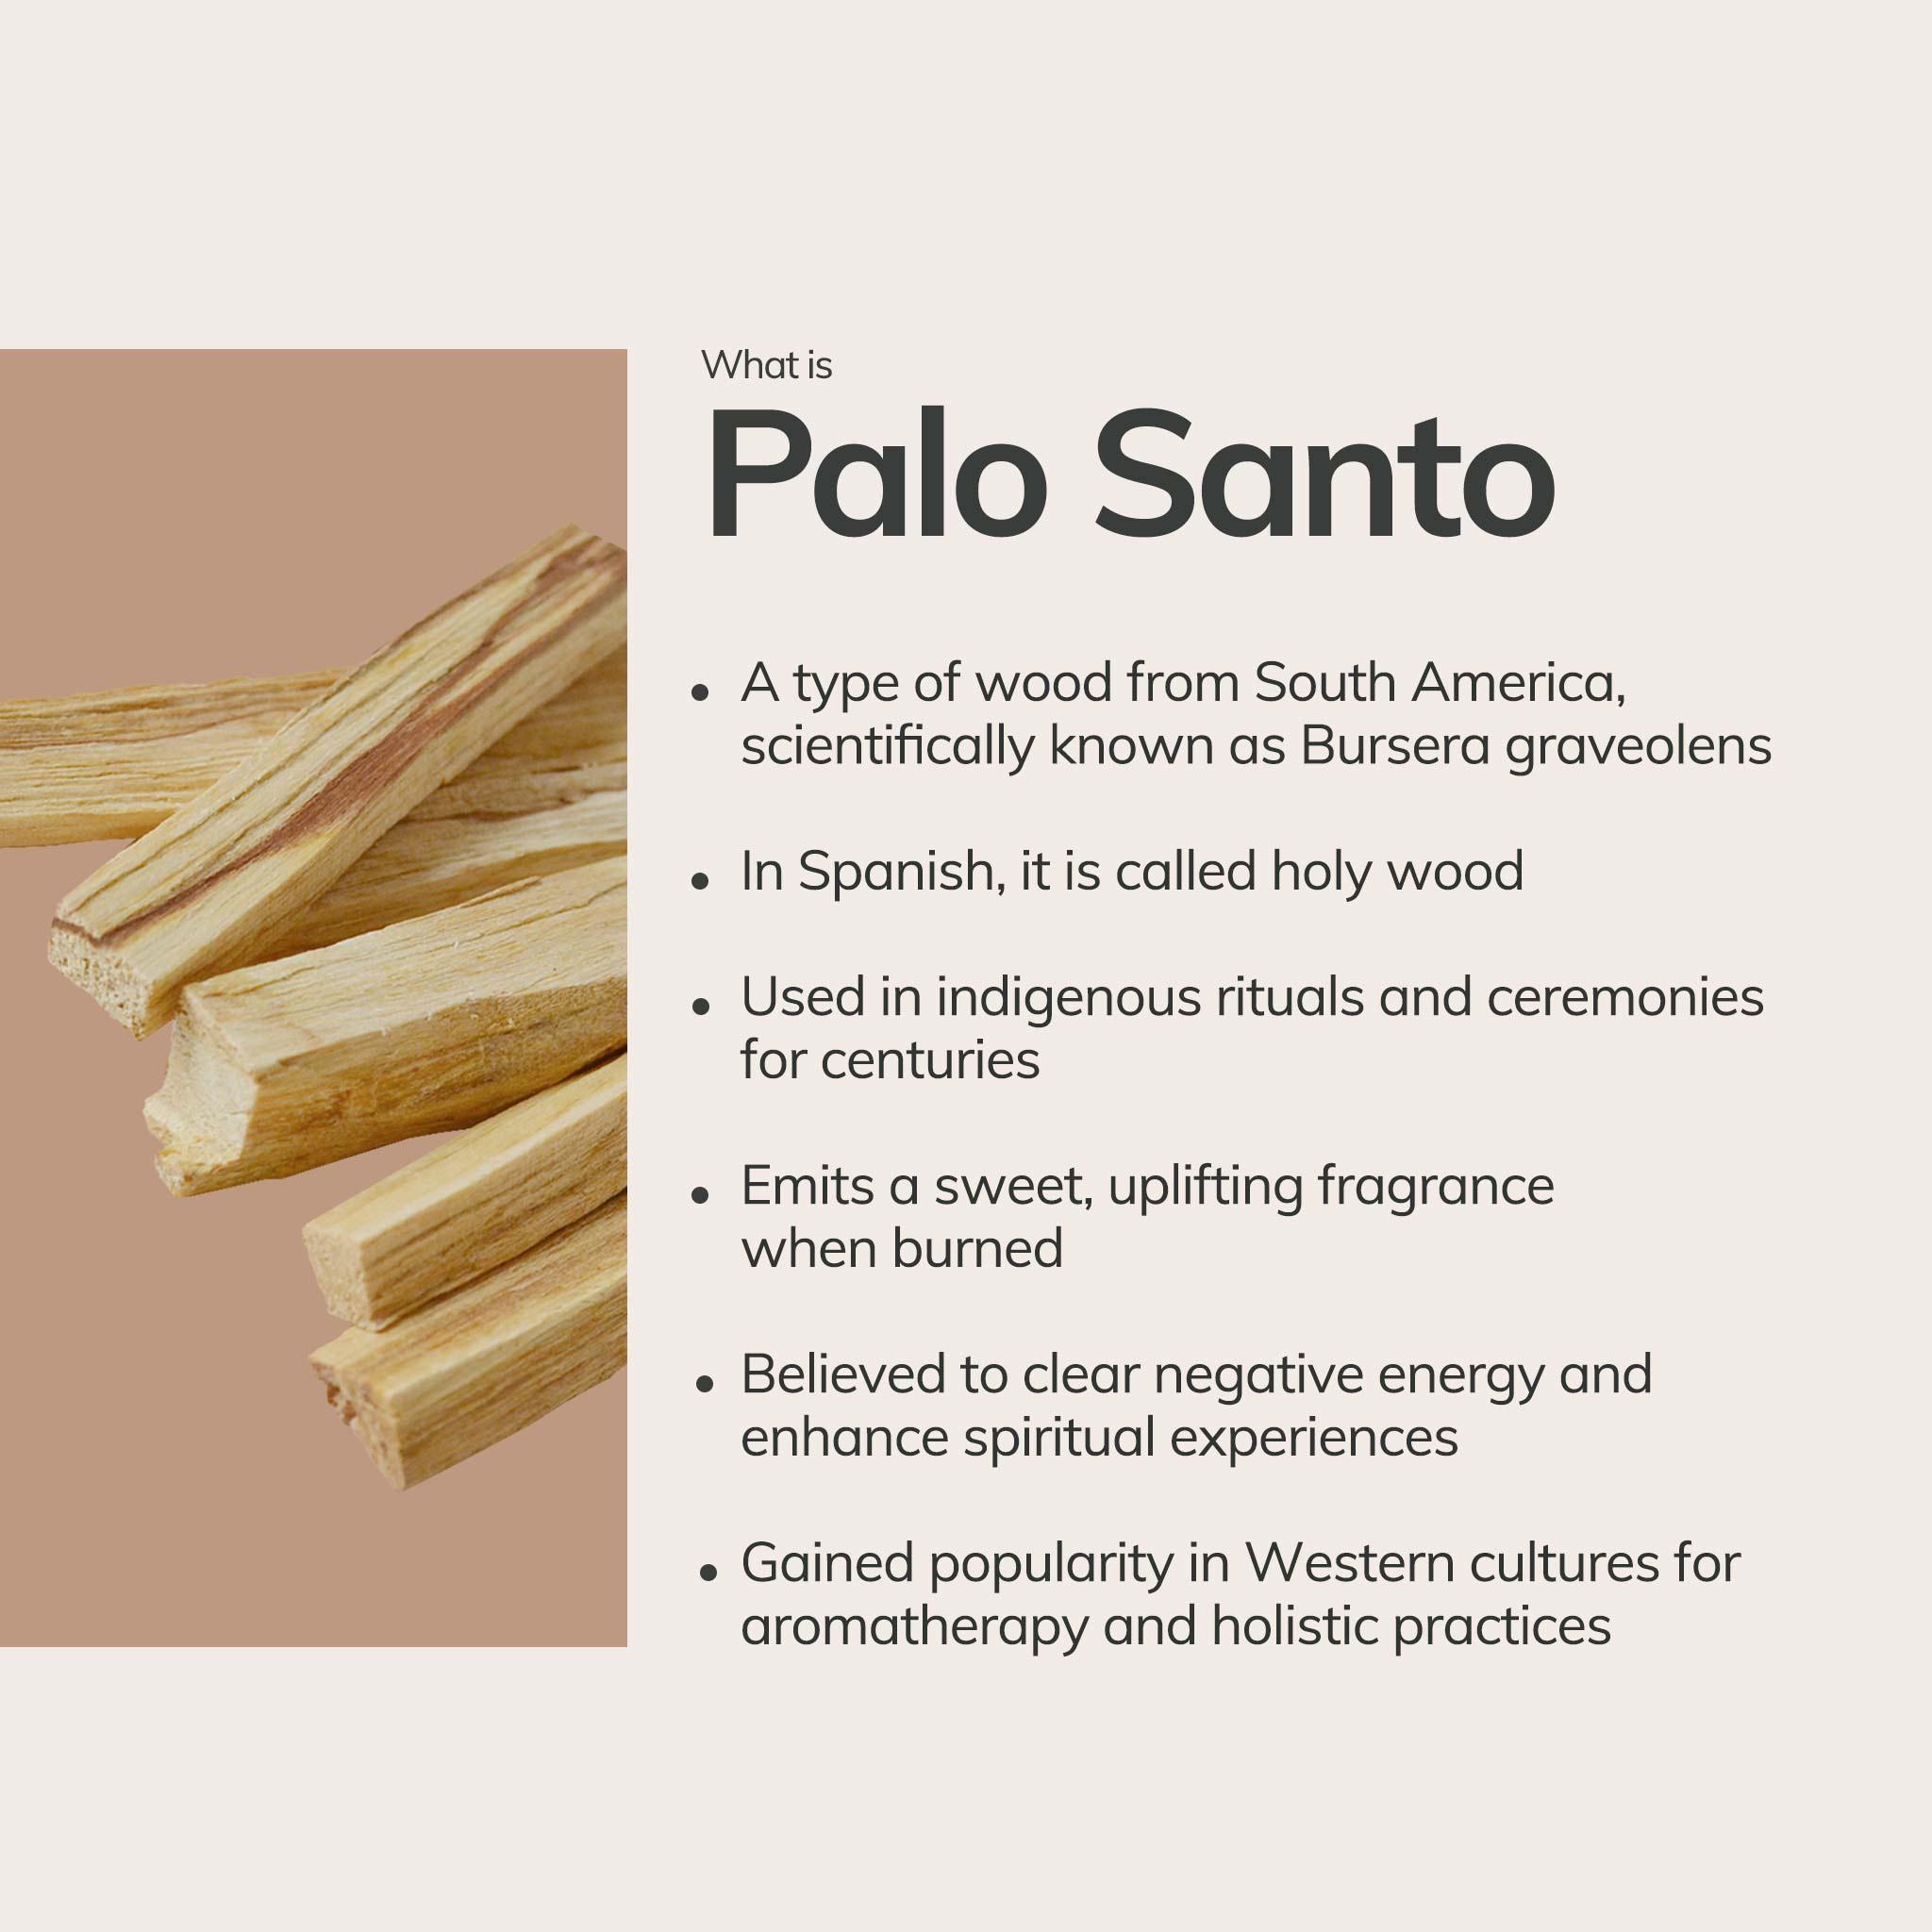 Left: palo santo wood sticks; Right: Bullet list telling what is palo santo.